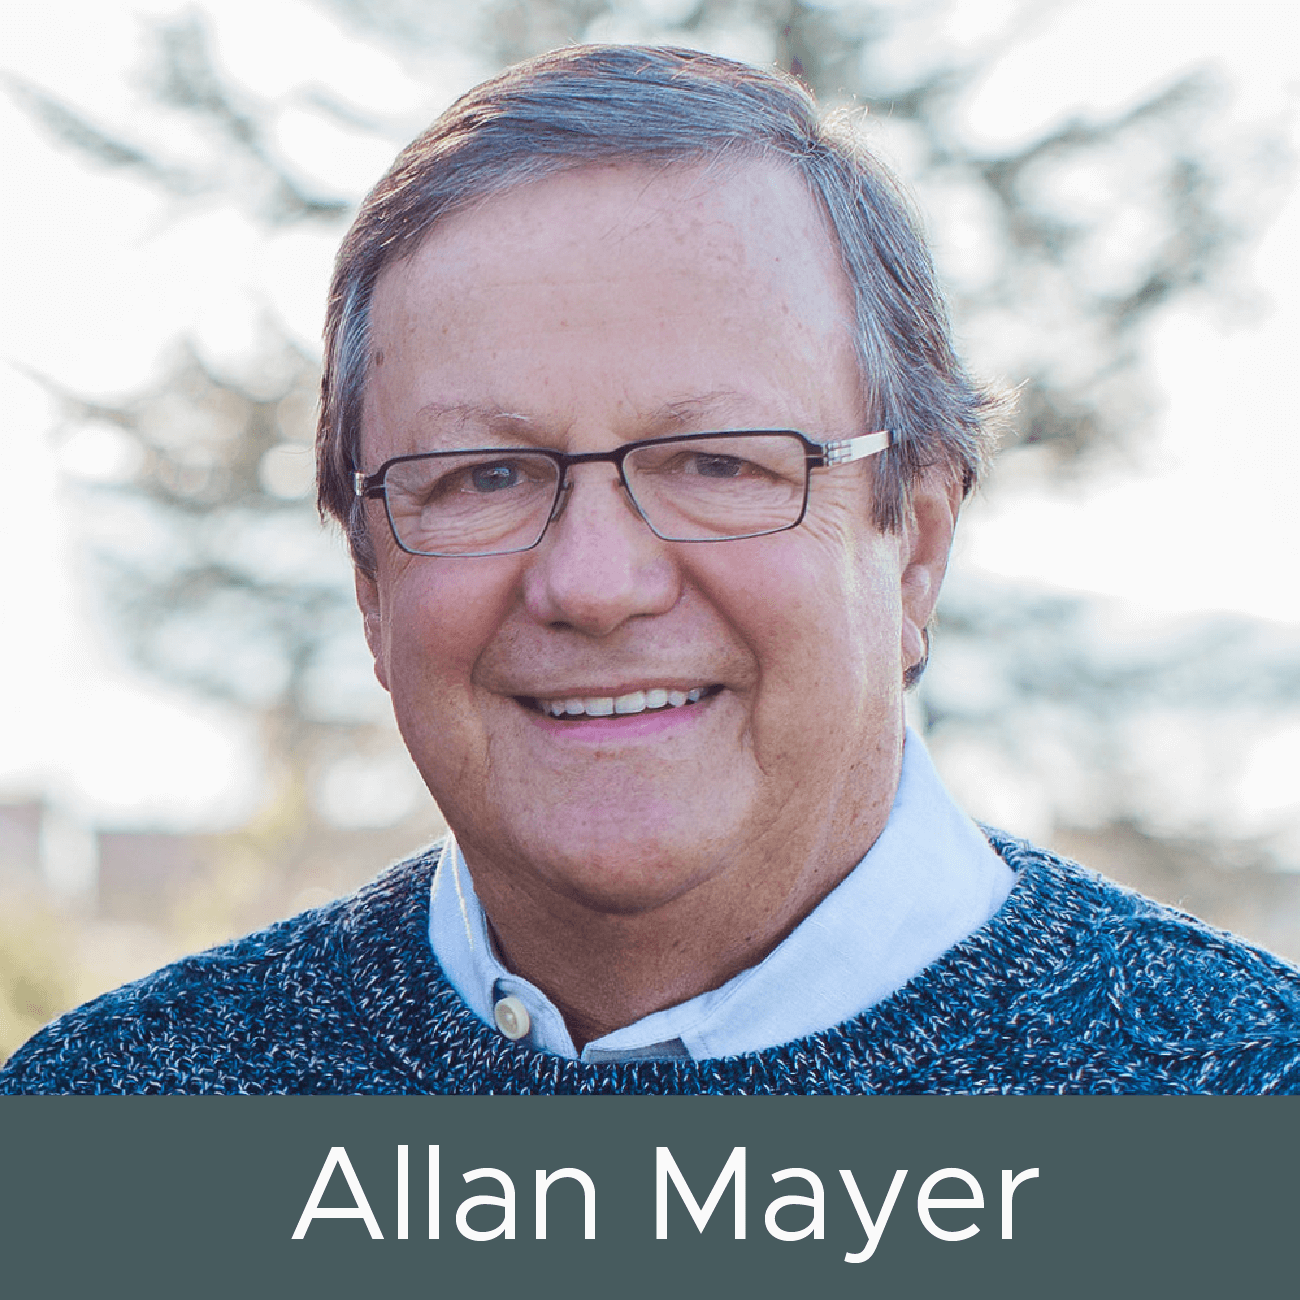 Allan Mayer